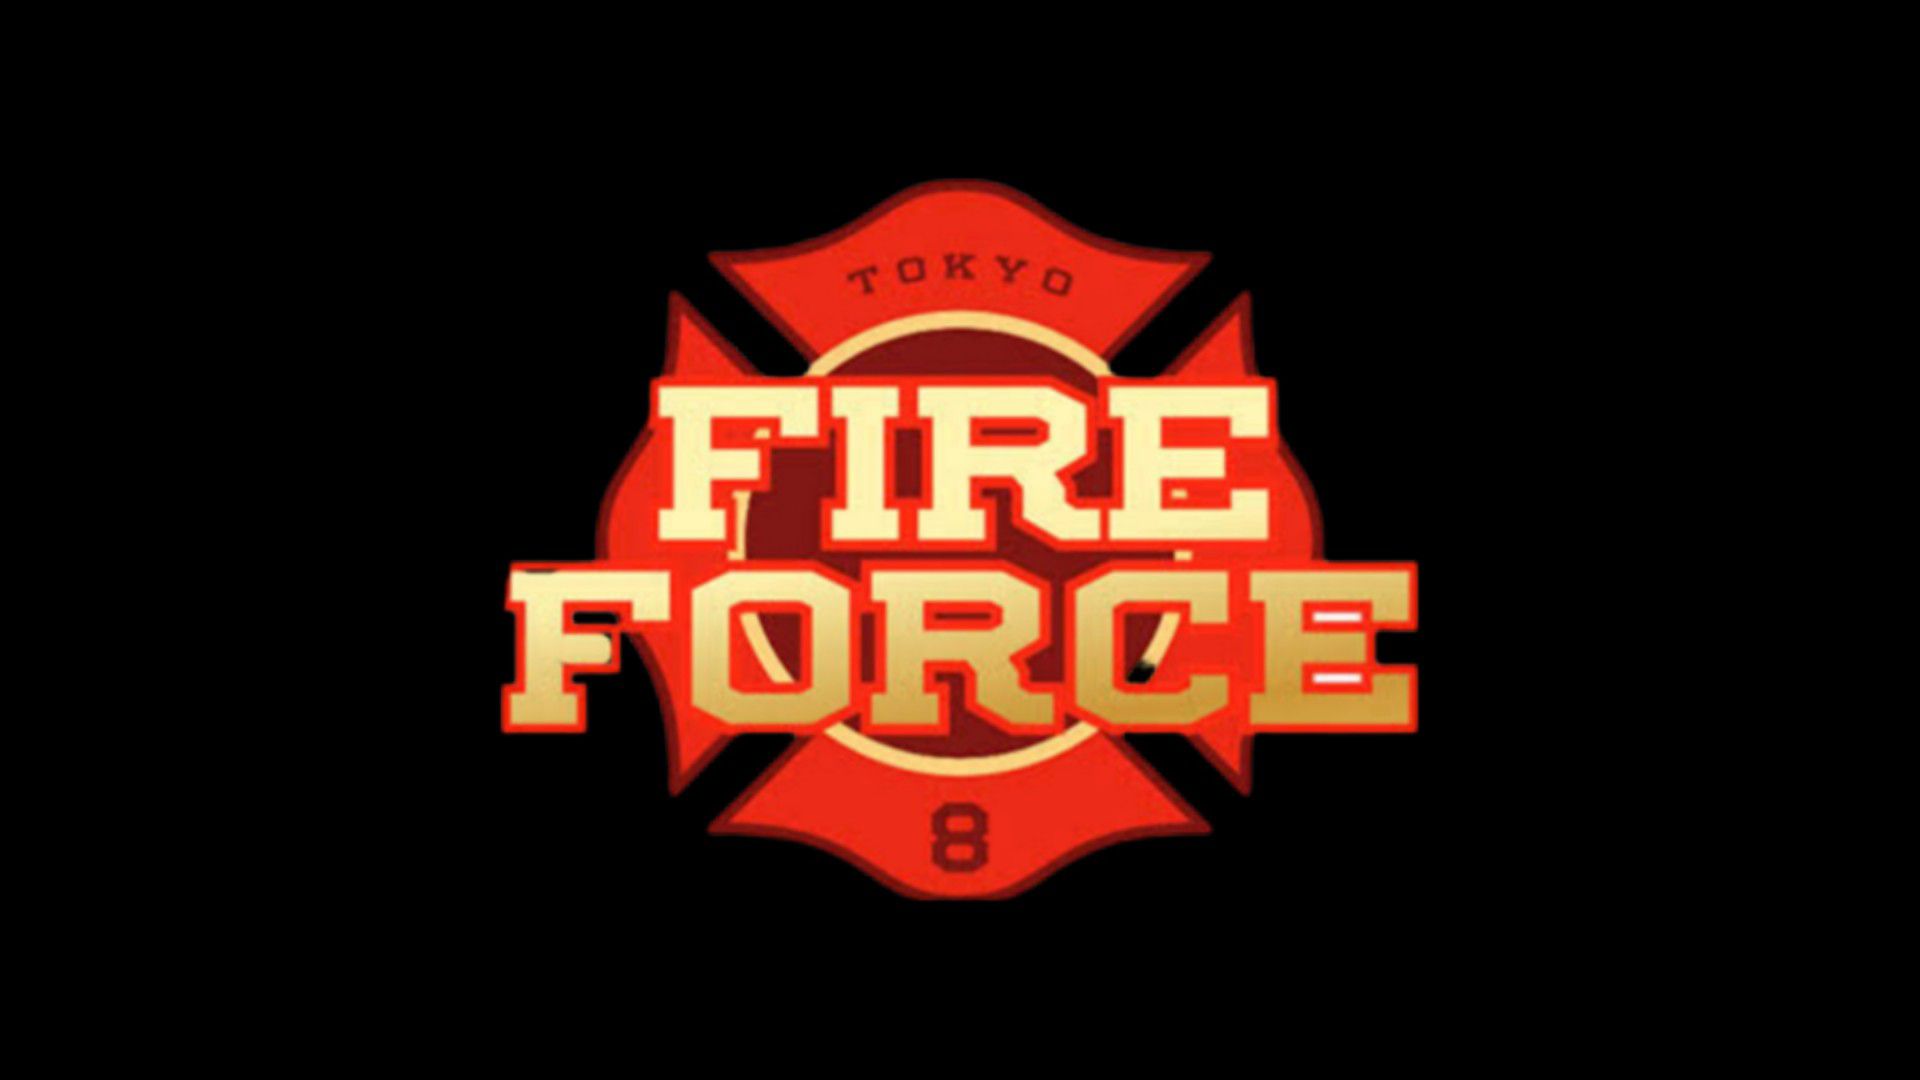 fire force episode 1 part 1 - BiliBili